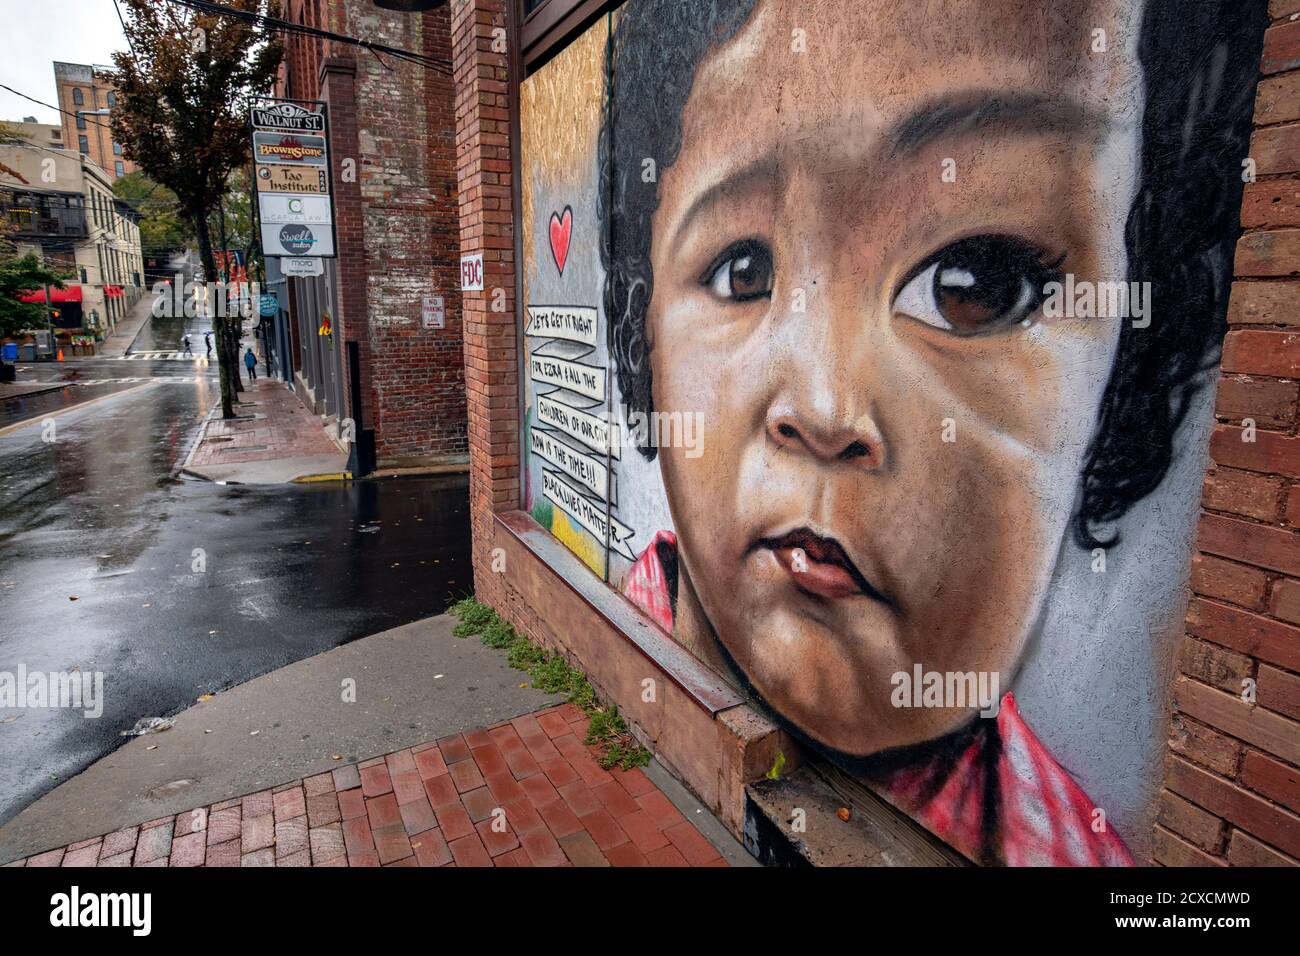 Street Art/Murals in support of Black Lives Matter movement on Walnut Street - Downtown Asheville, North Carolina, USA Stock Photo